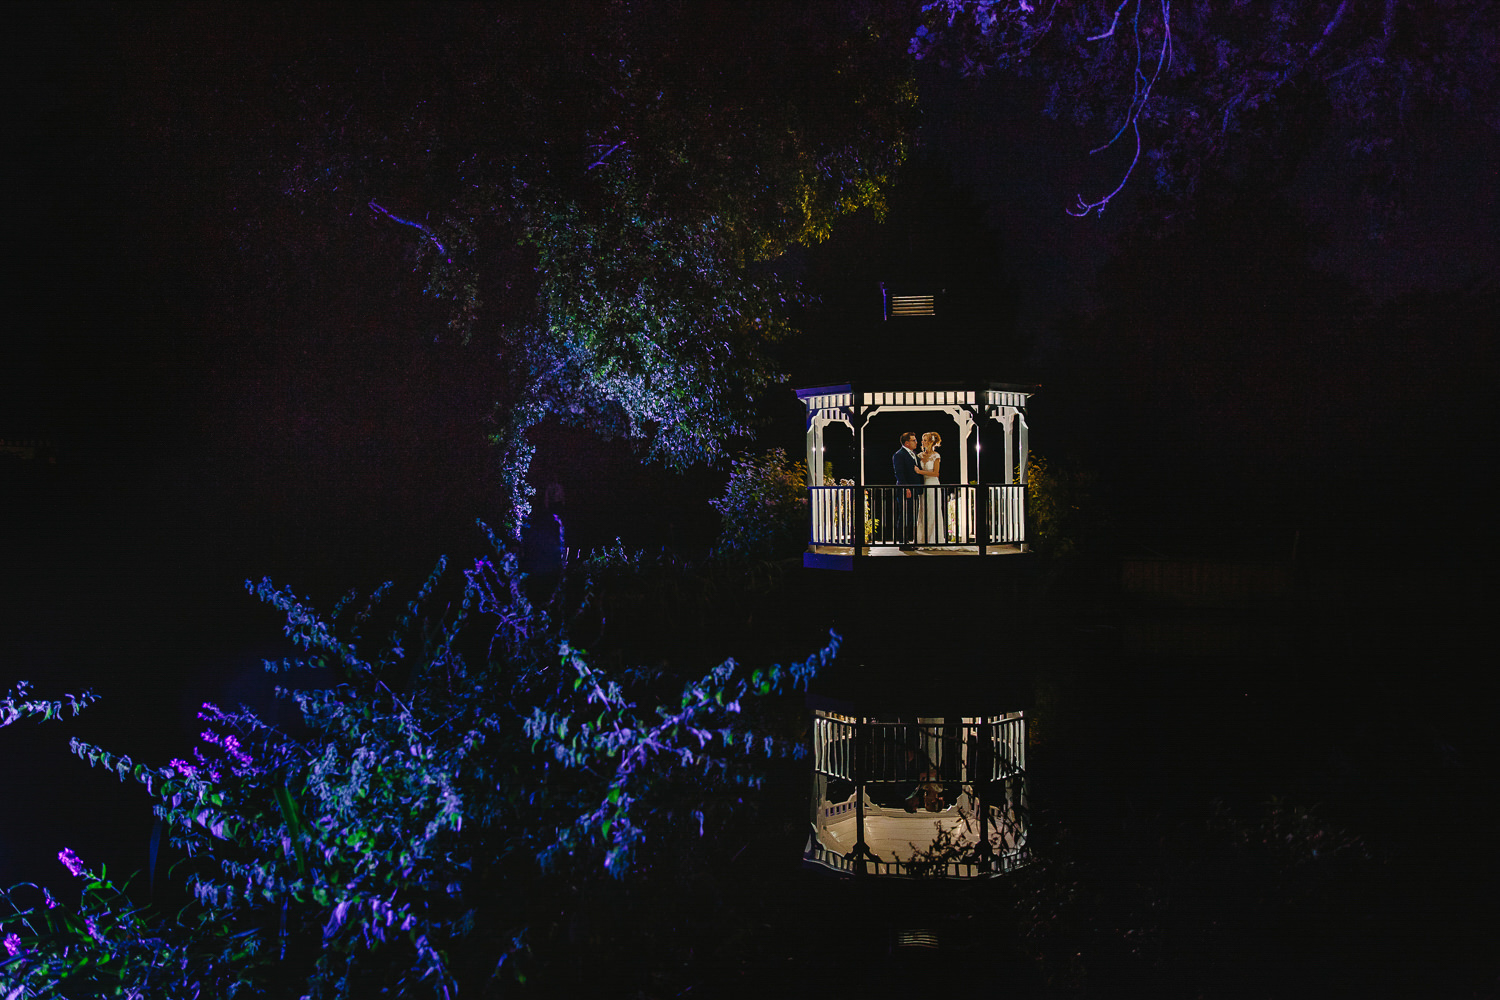 Bride and groom, night time, gazebo, purple lit trees, lake, reflection